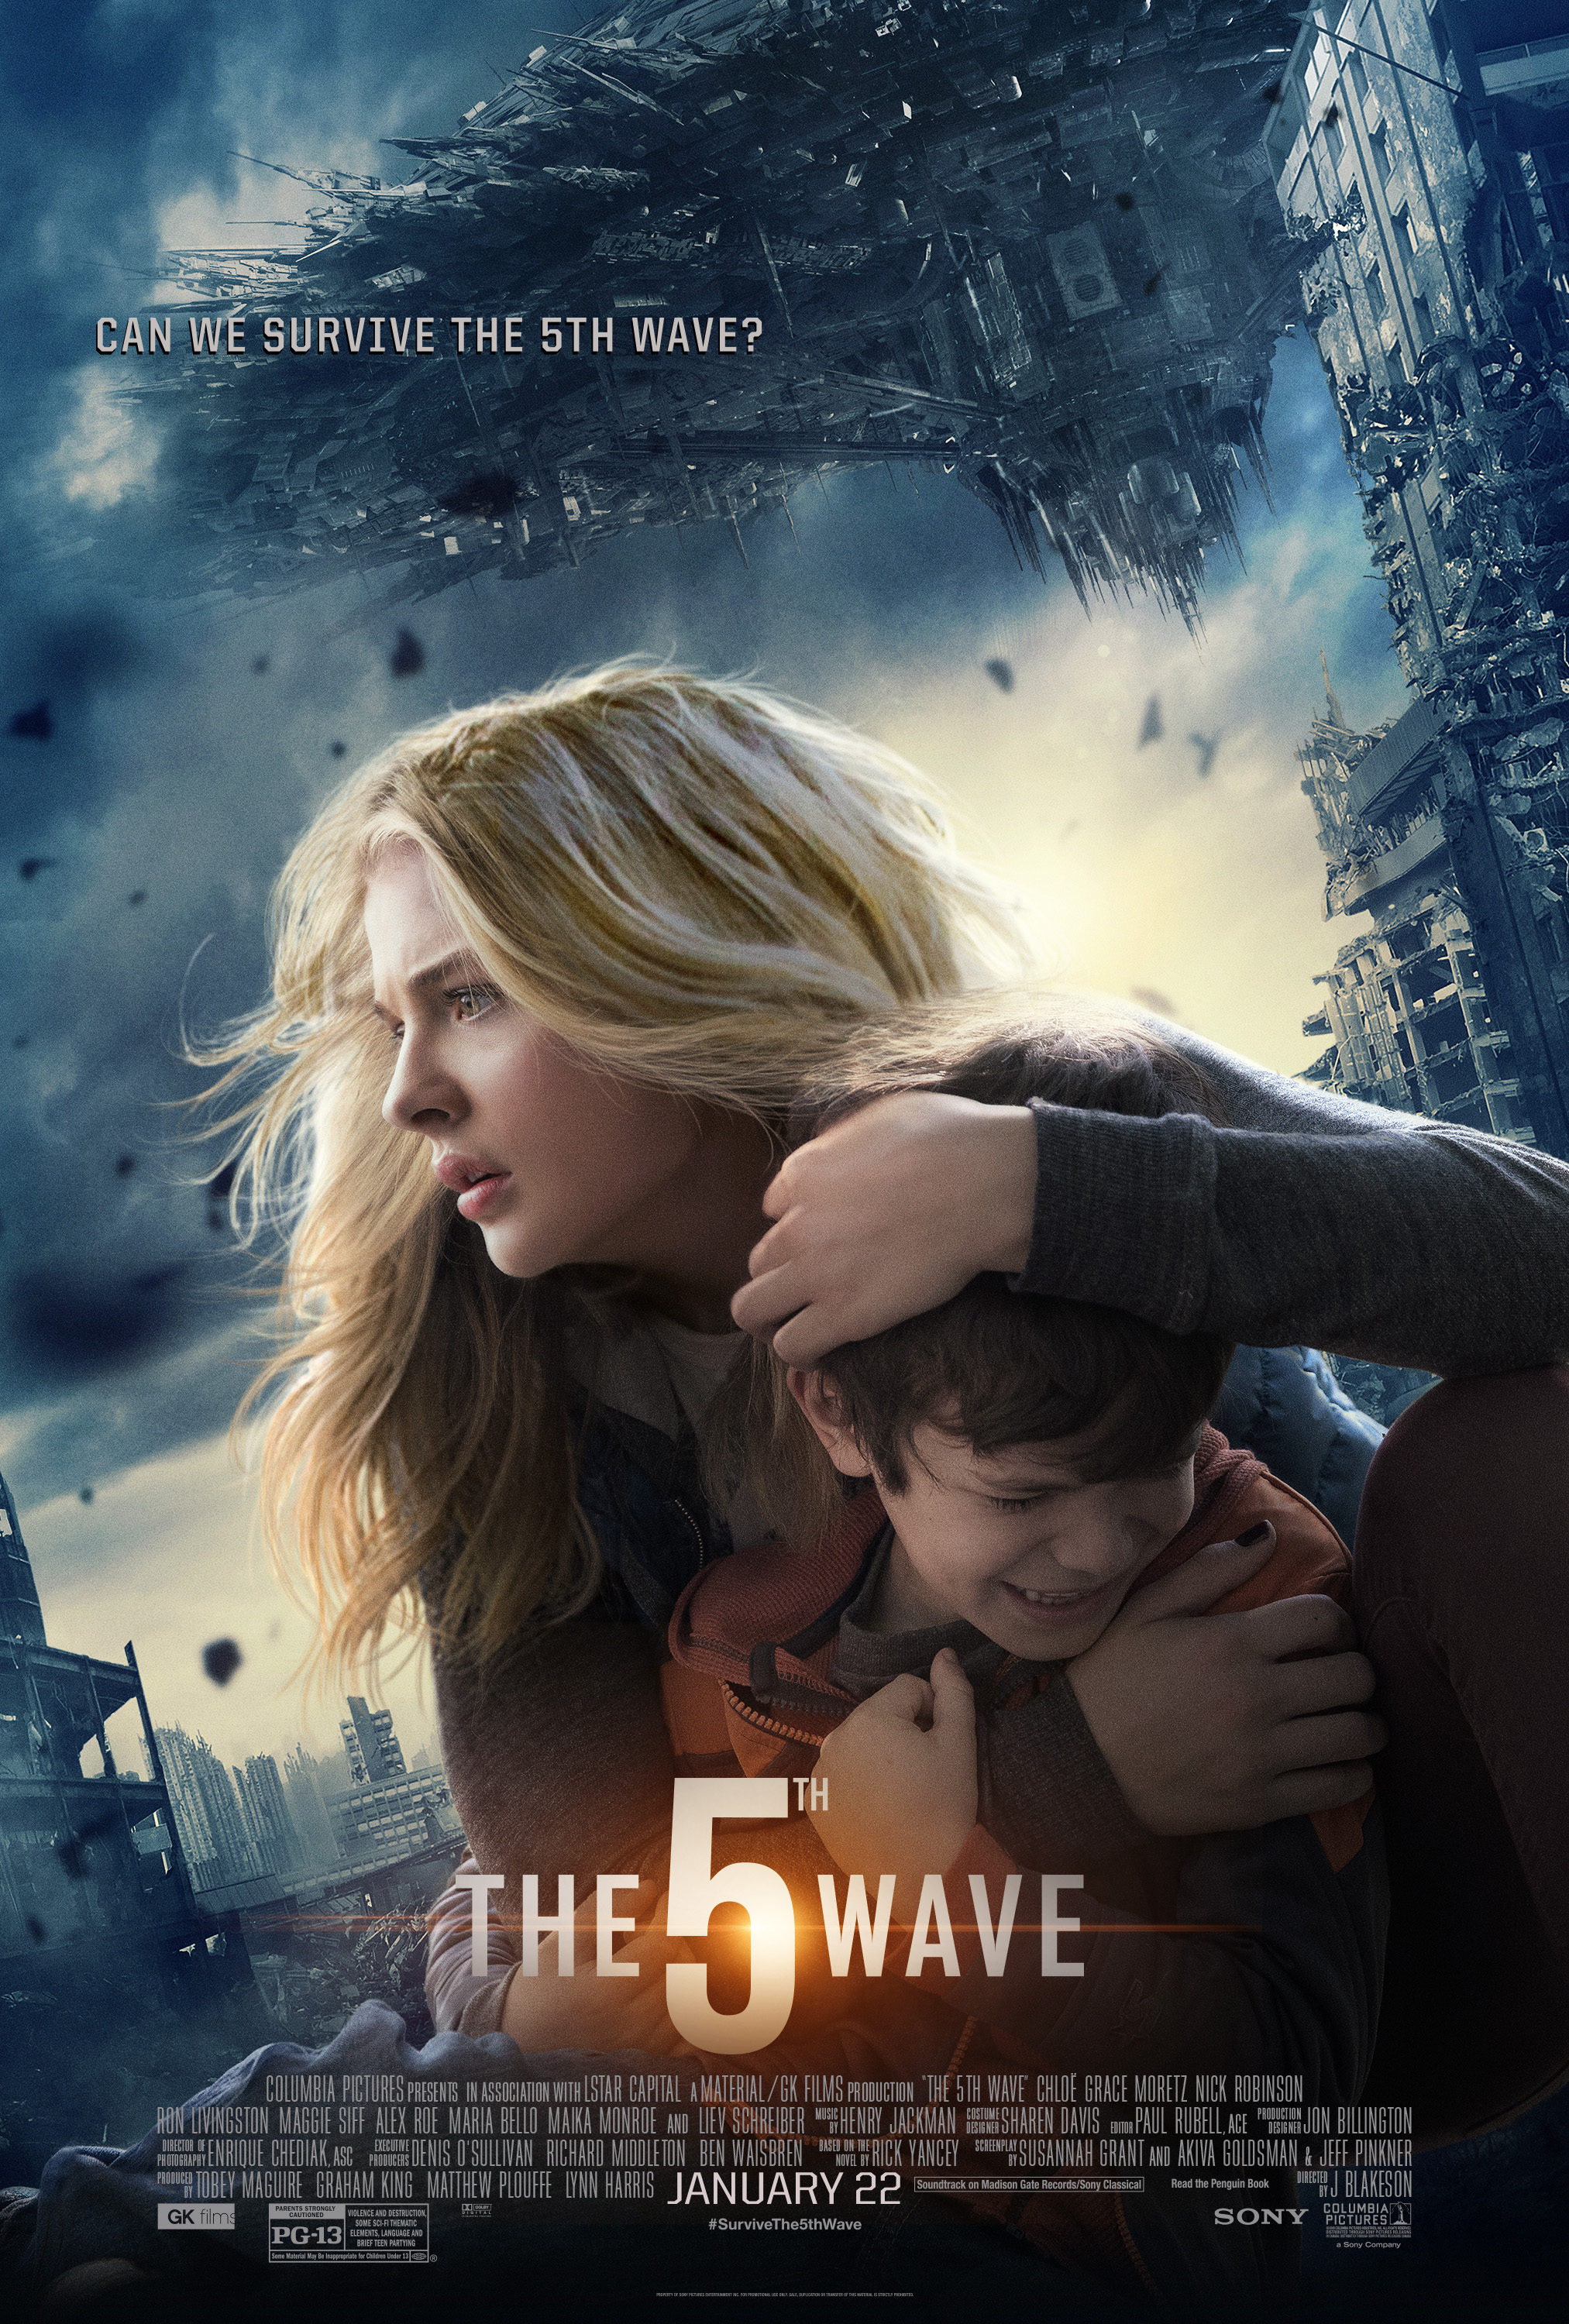 The 5th Wave (IMDb).